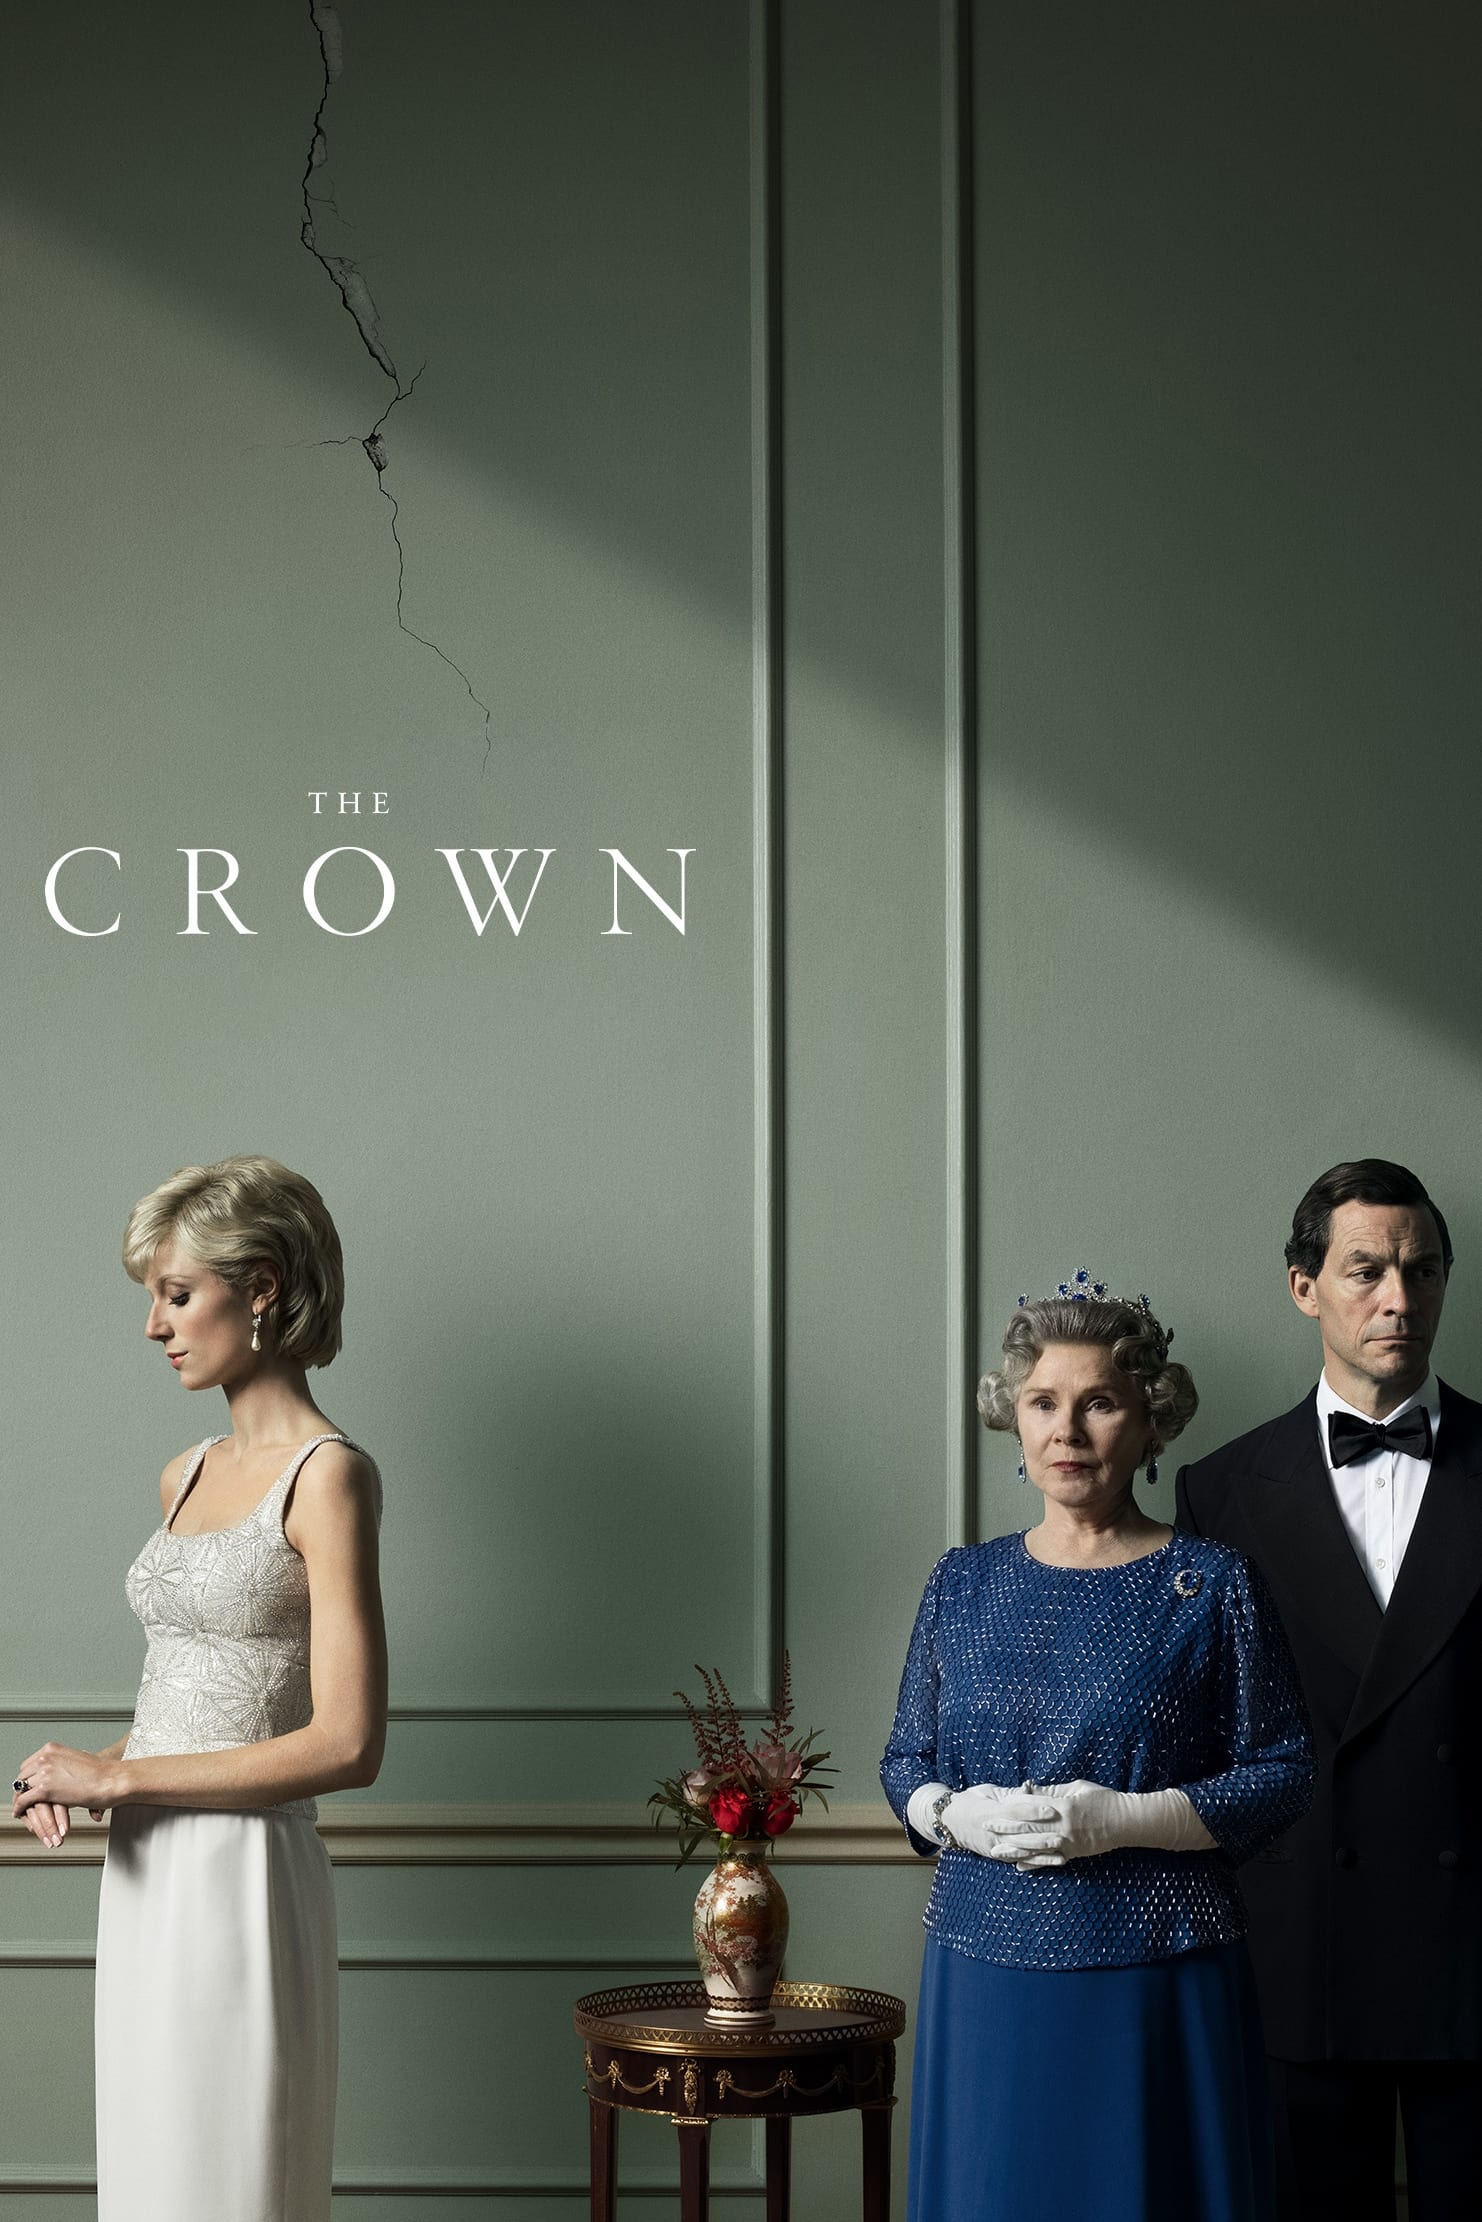 The Crown (2016) เดอะ คราวน์ Season 1-4 (จบ)